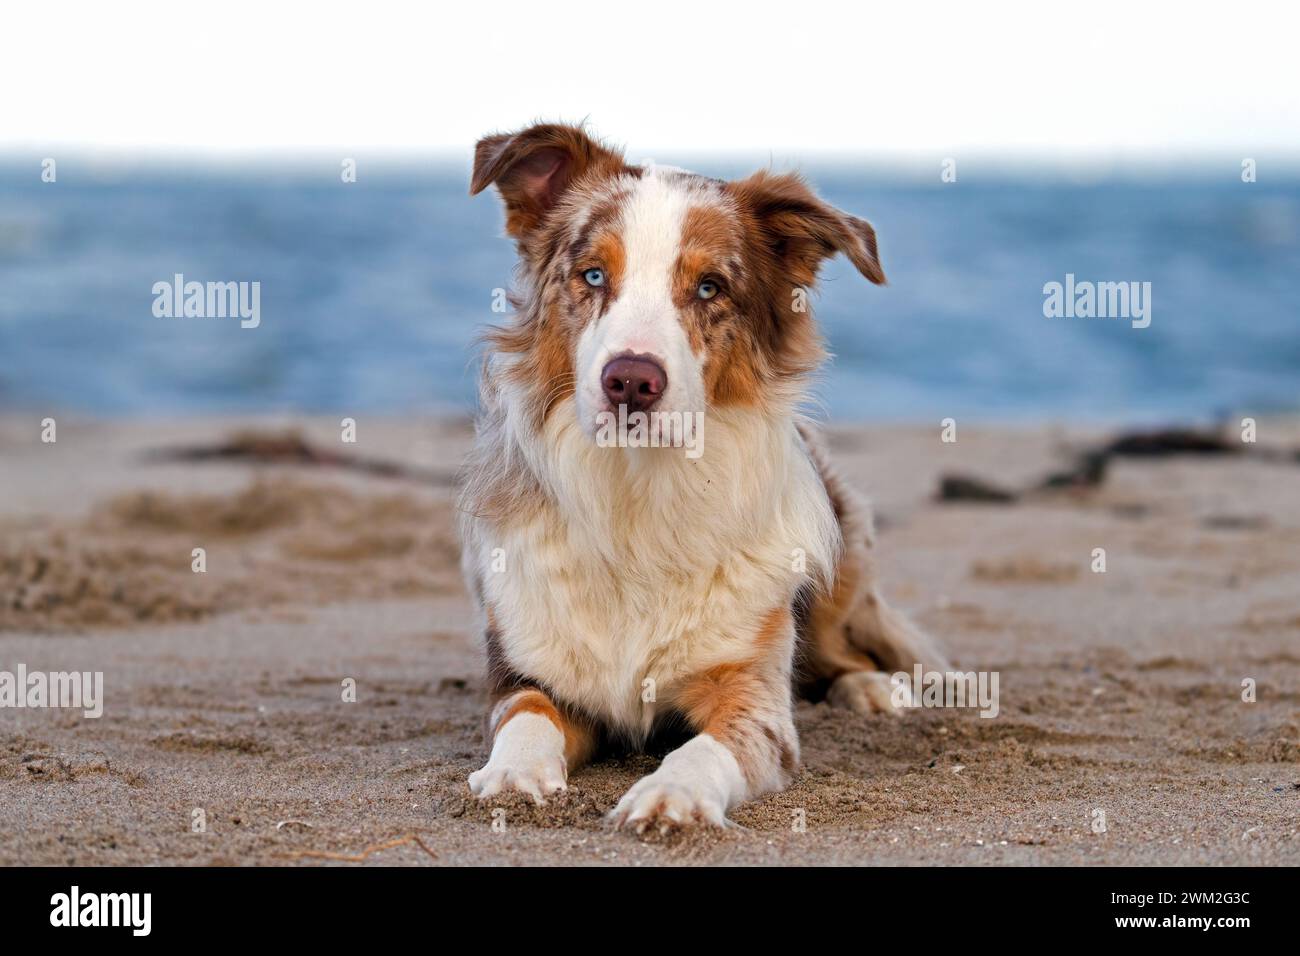 Australian Shepherd / Aussie, breed of herding dog from the United States, lying on sandy beach Stock Photo